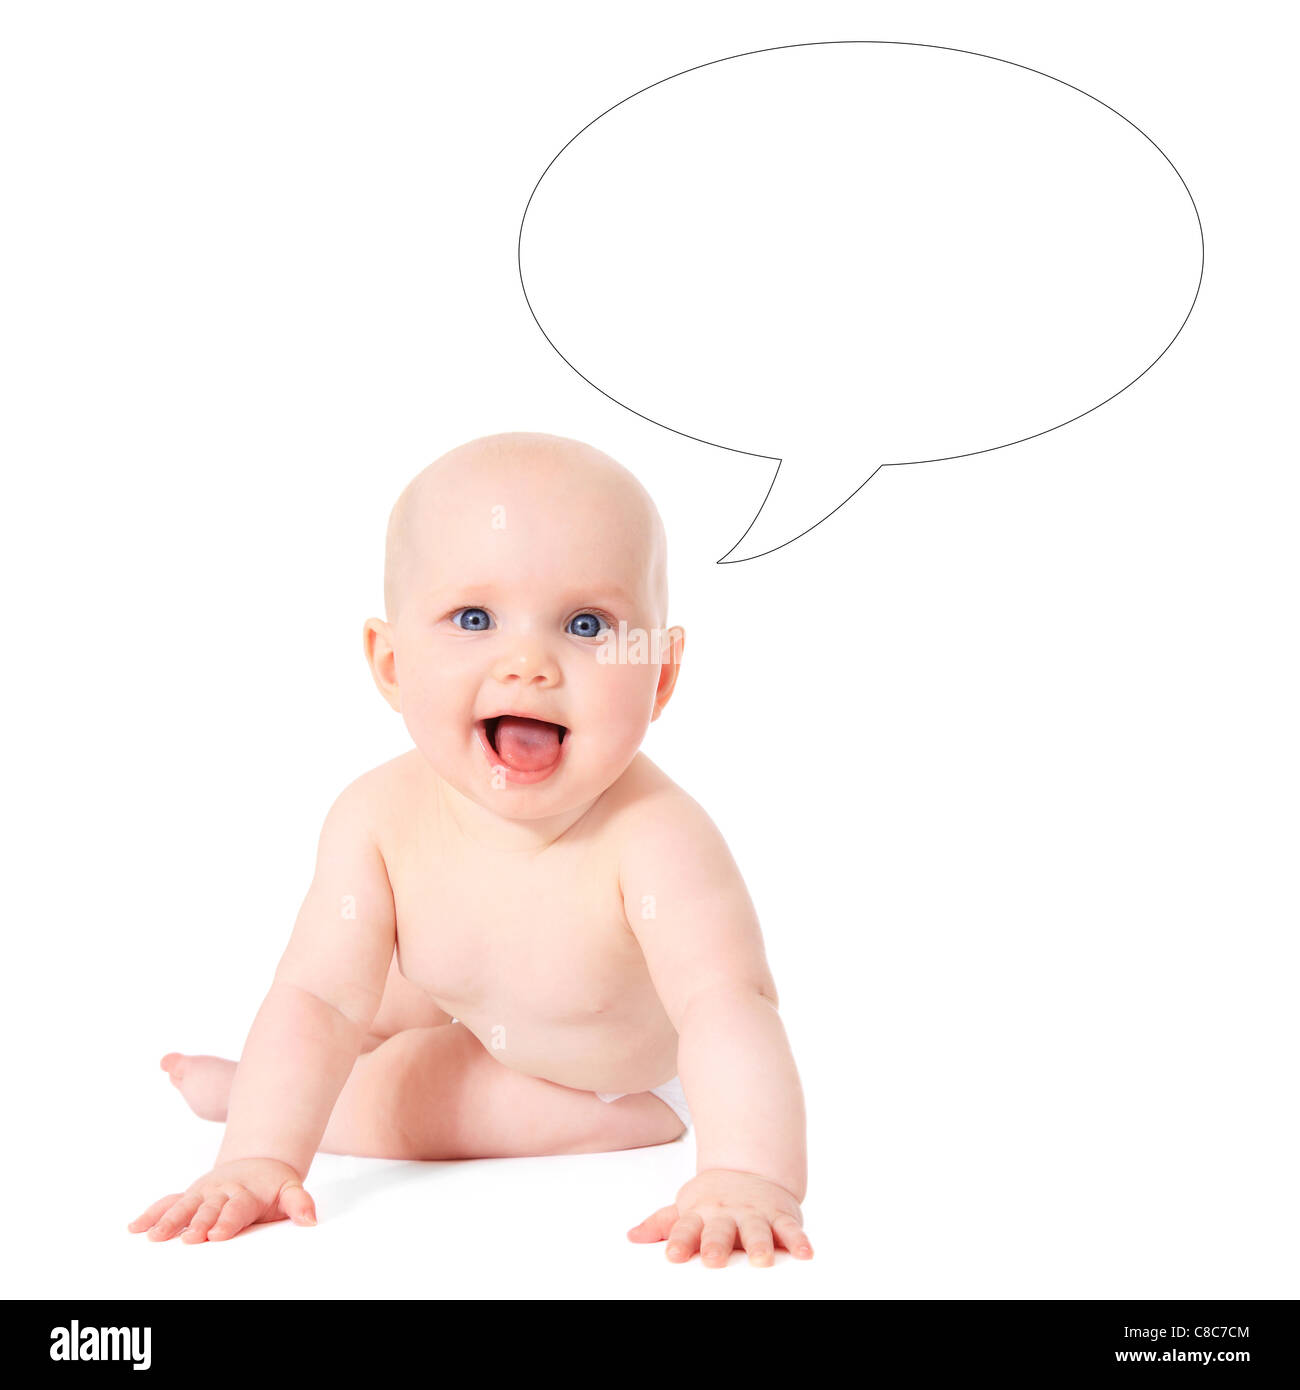 [Image: cute-little-baby-with-speech-bubble-next...C8C7CM.jpg]